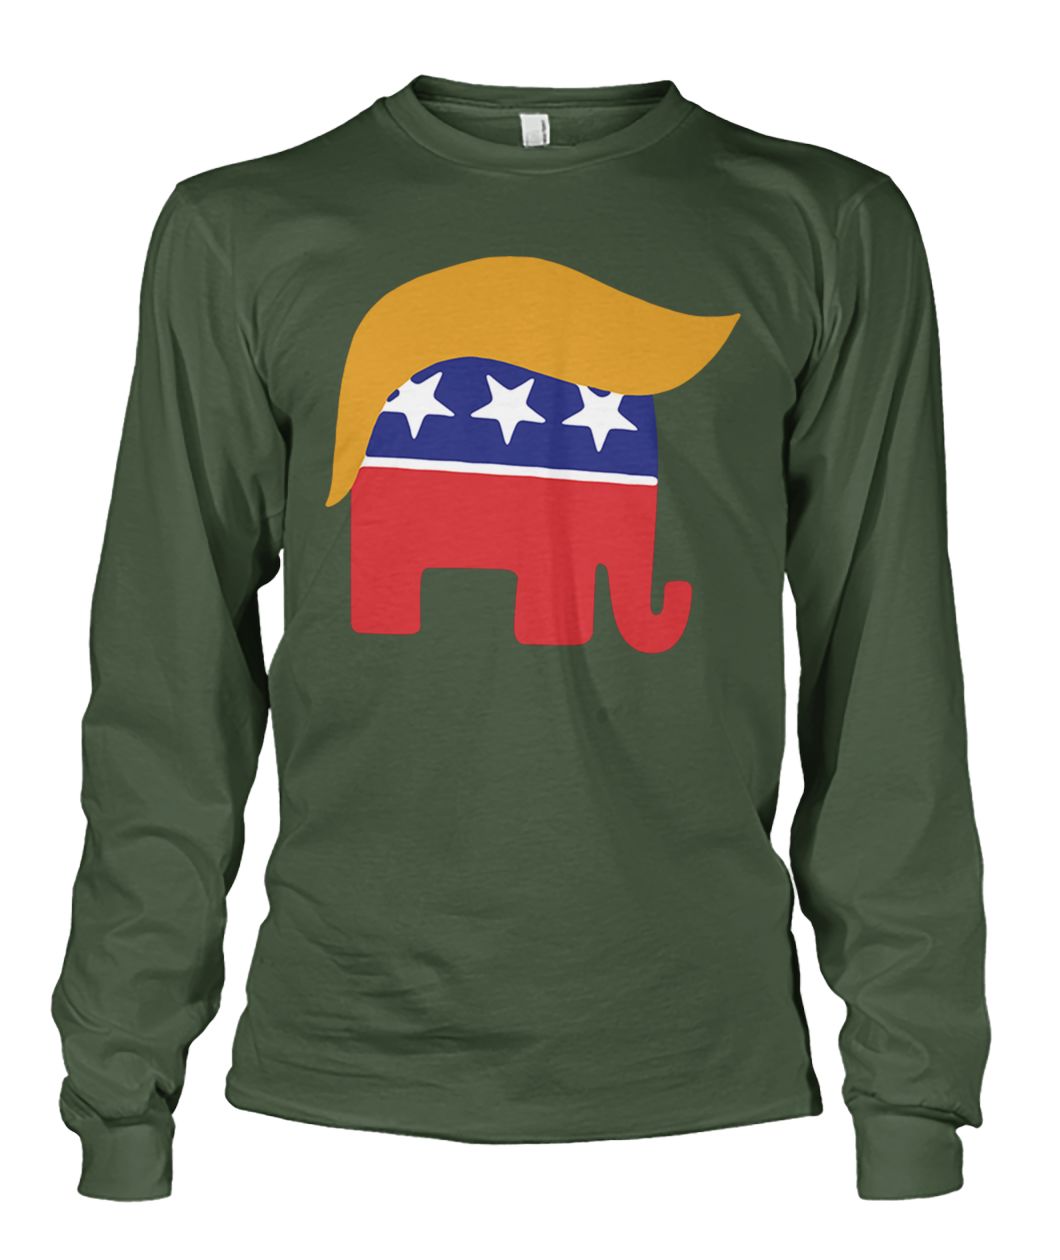 GOP donald trump republican elephant unisex long sleeve